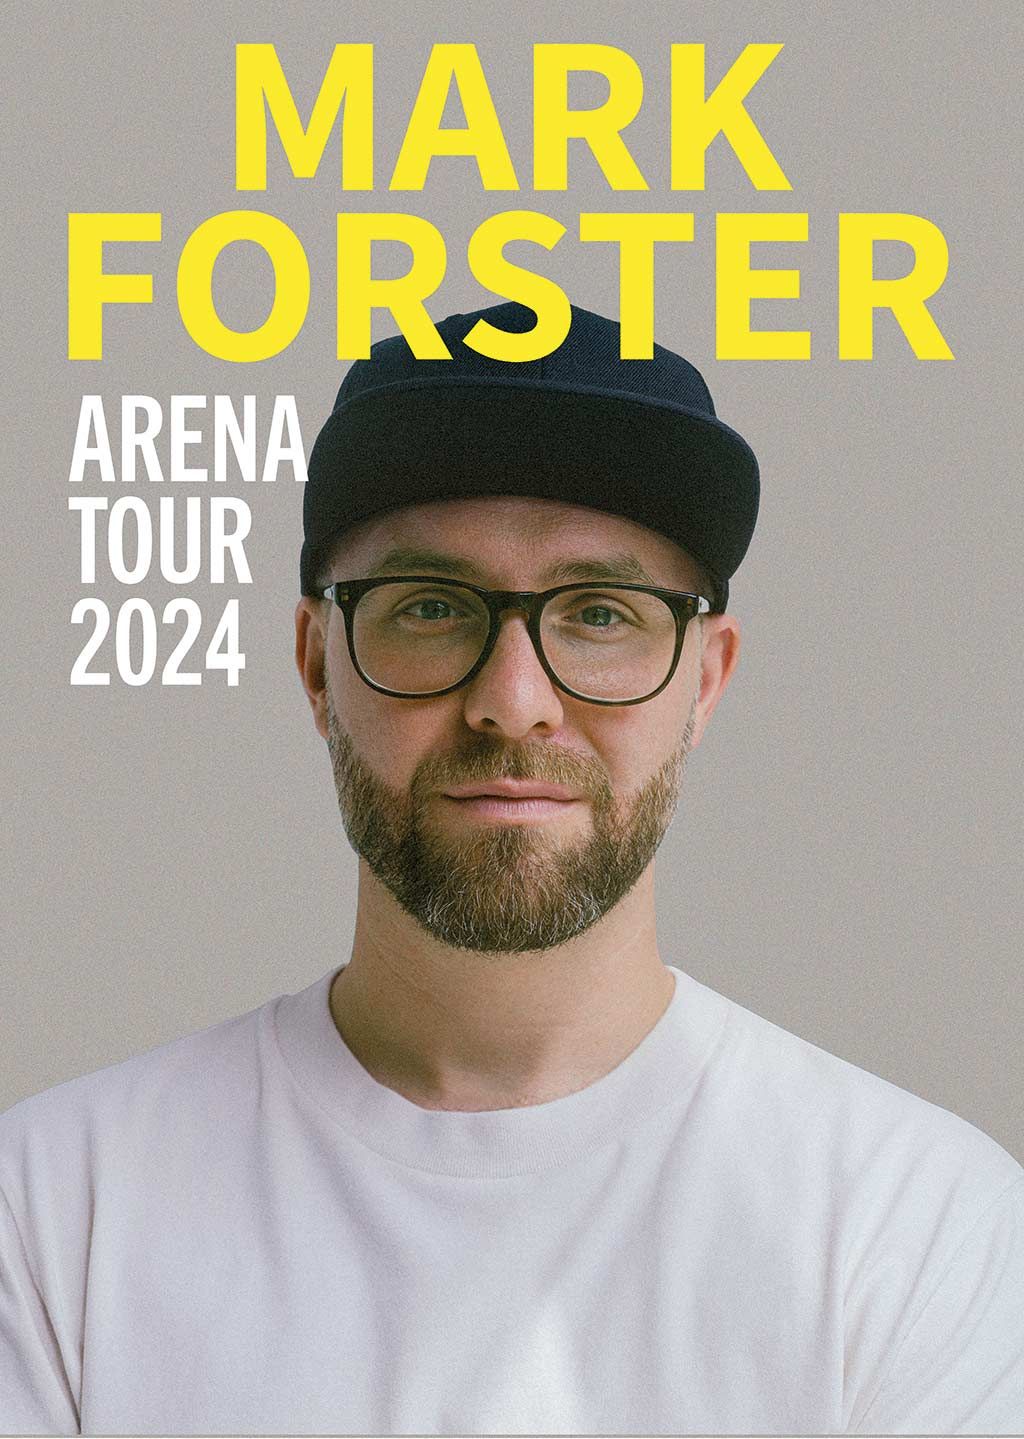 Mark Forster - Arena Tour 2024 at Volkswagen Halle Tickets